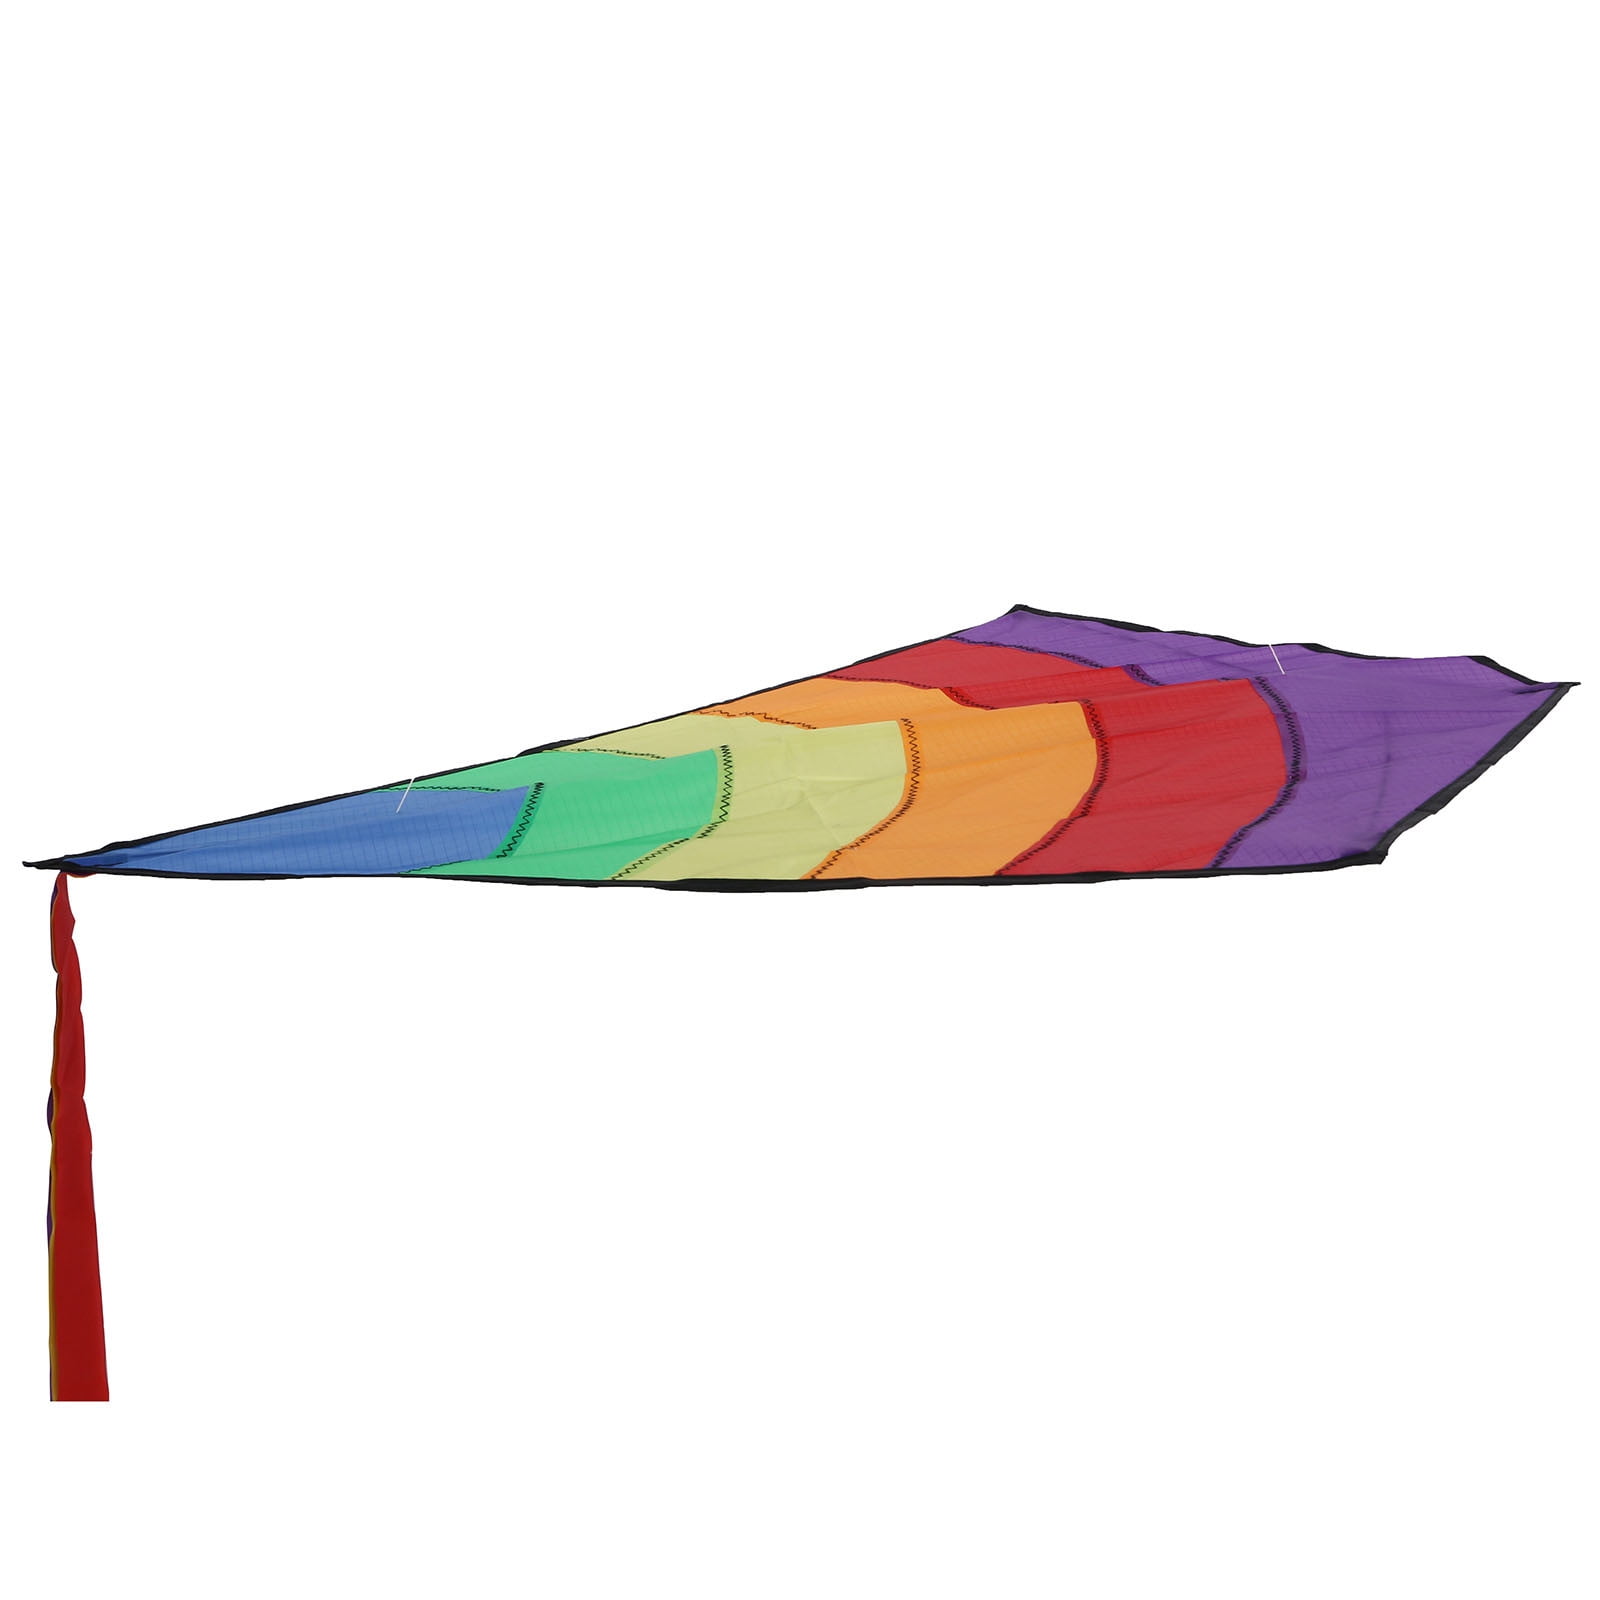 free shipping high quality 6m rainbow windsock kite flying large kites  adult kite reel ripstop nylon kite flying eagle kitsurf